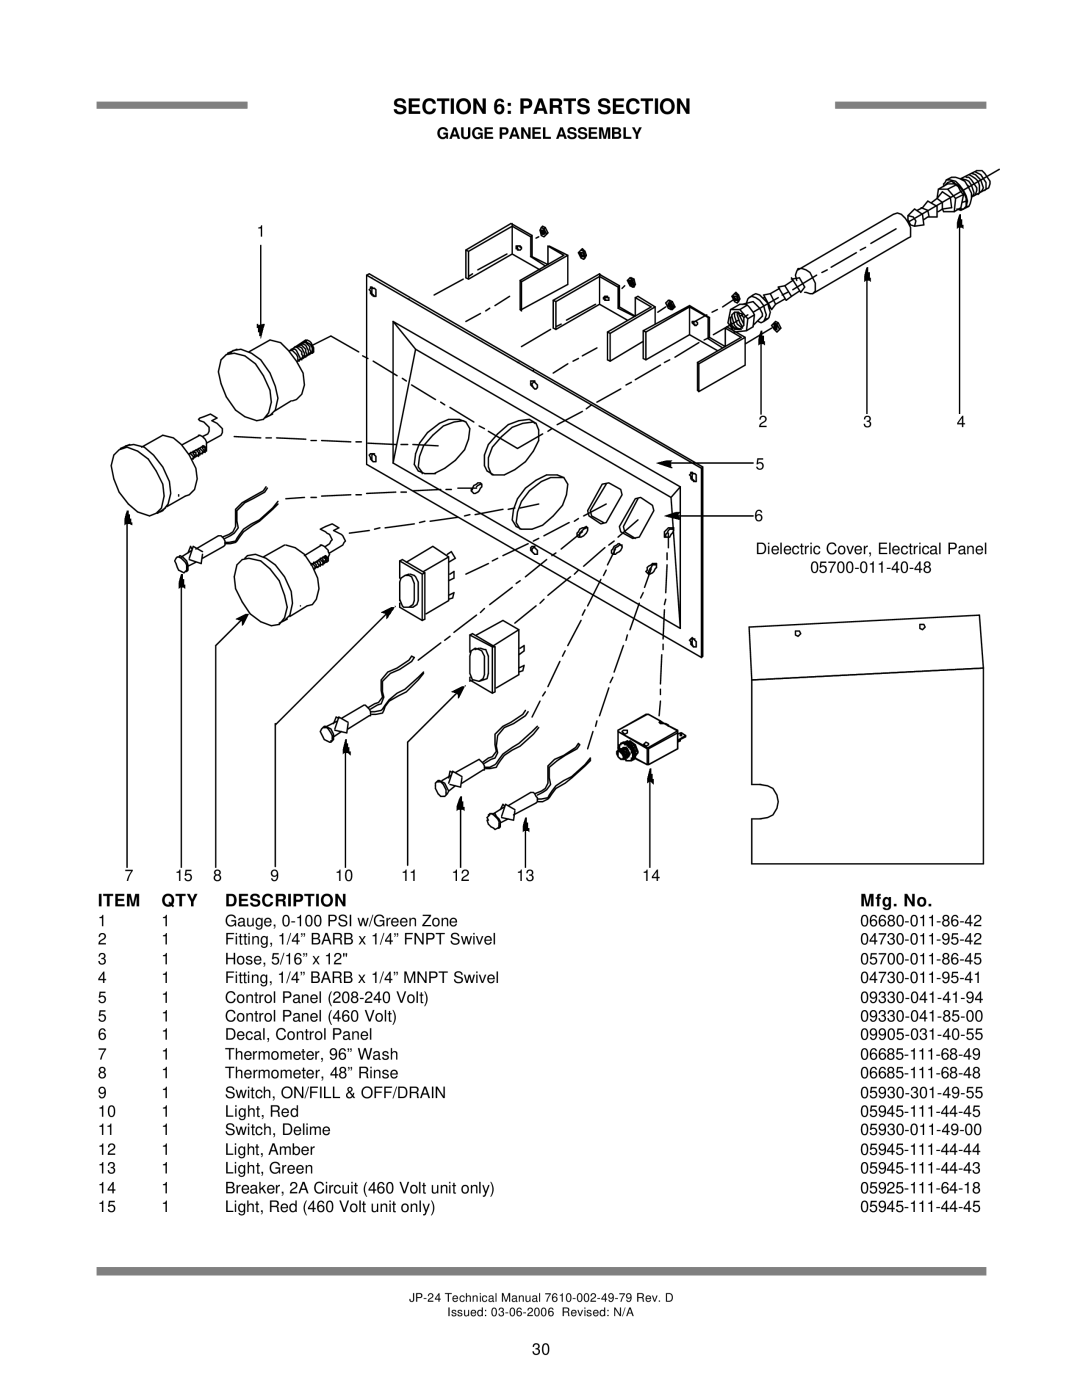 Jackson JP-24F, jp-24b, JP-24BF technical manual Parts Section, Item Qty Description, Mfg. No, Gauge Panel Assembly 